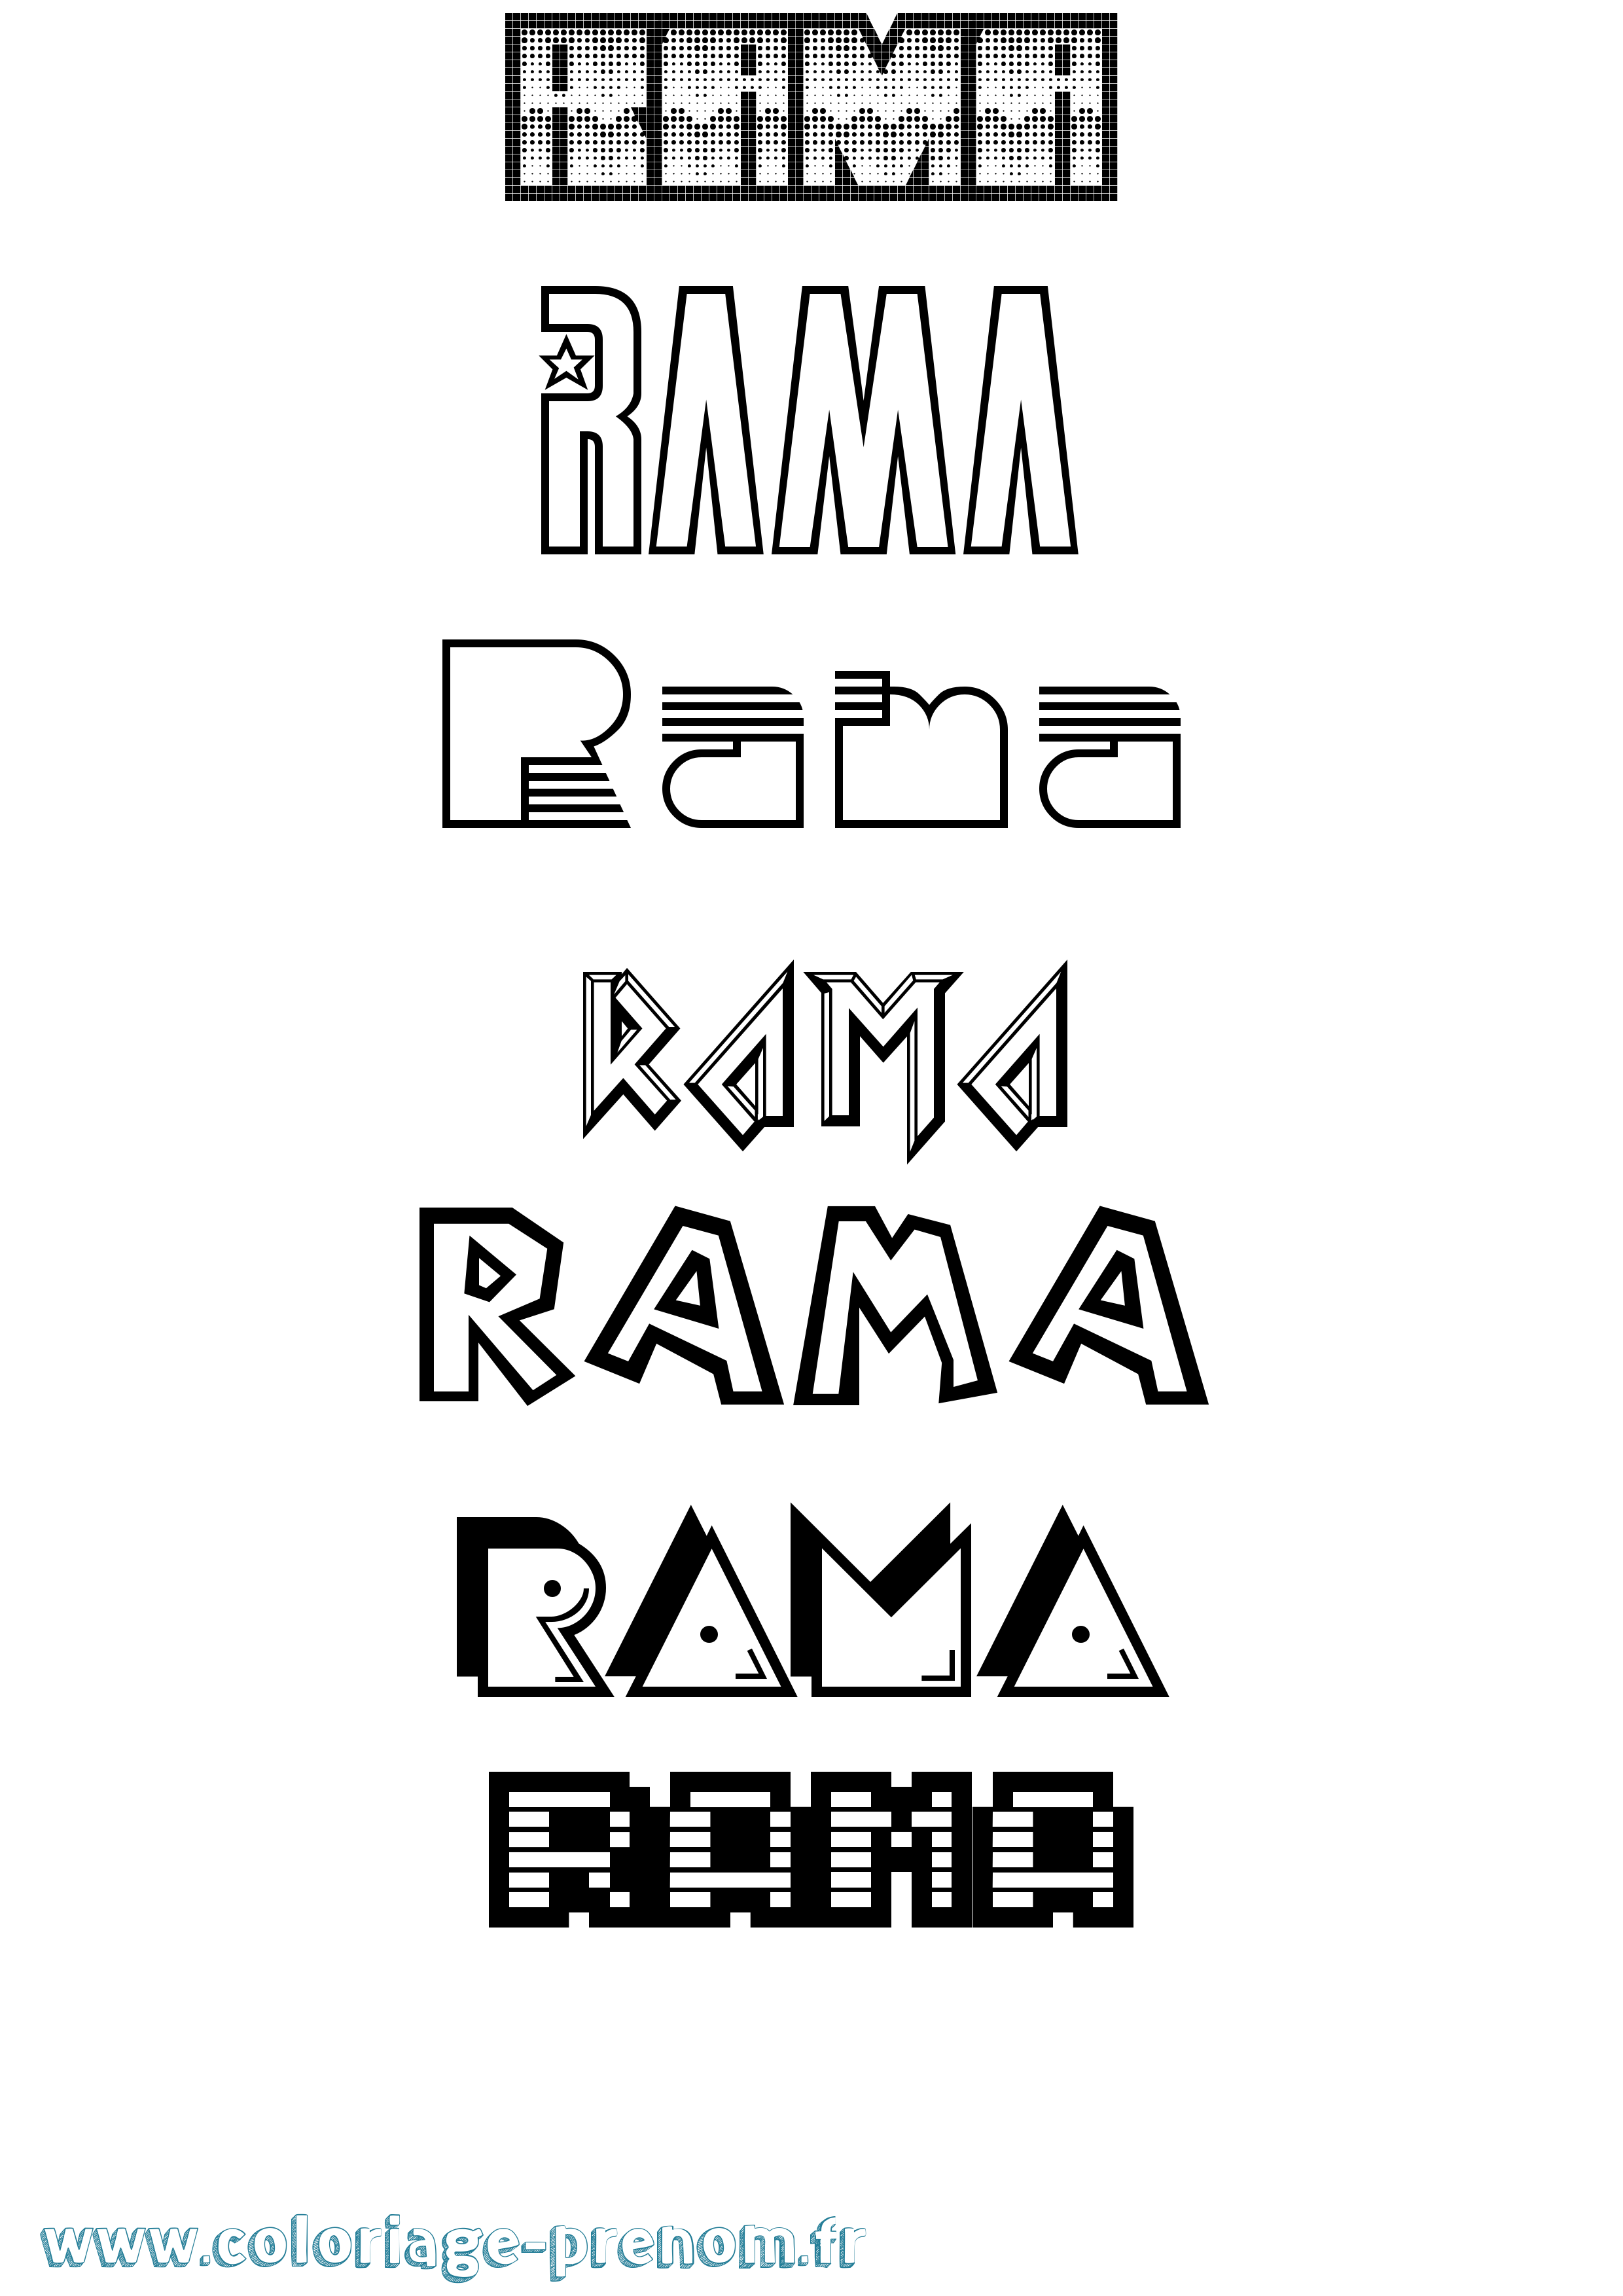 Coloriage prénom Rama Jeux Vidéos